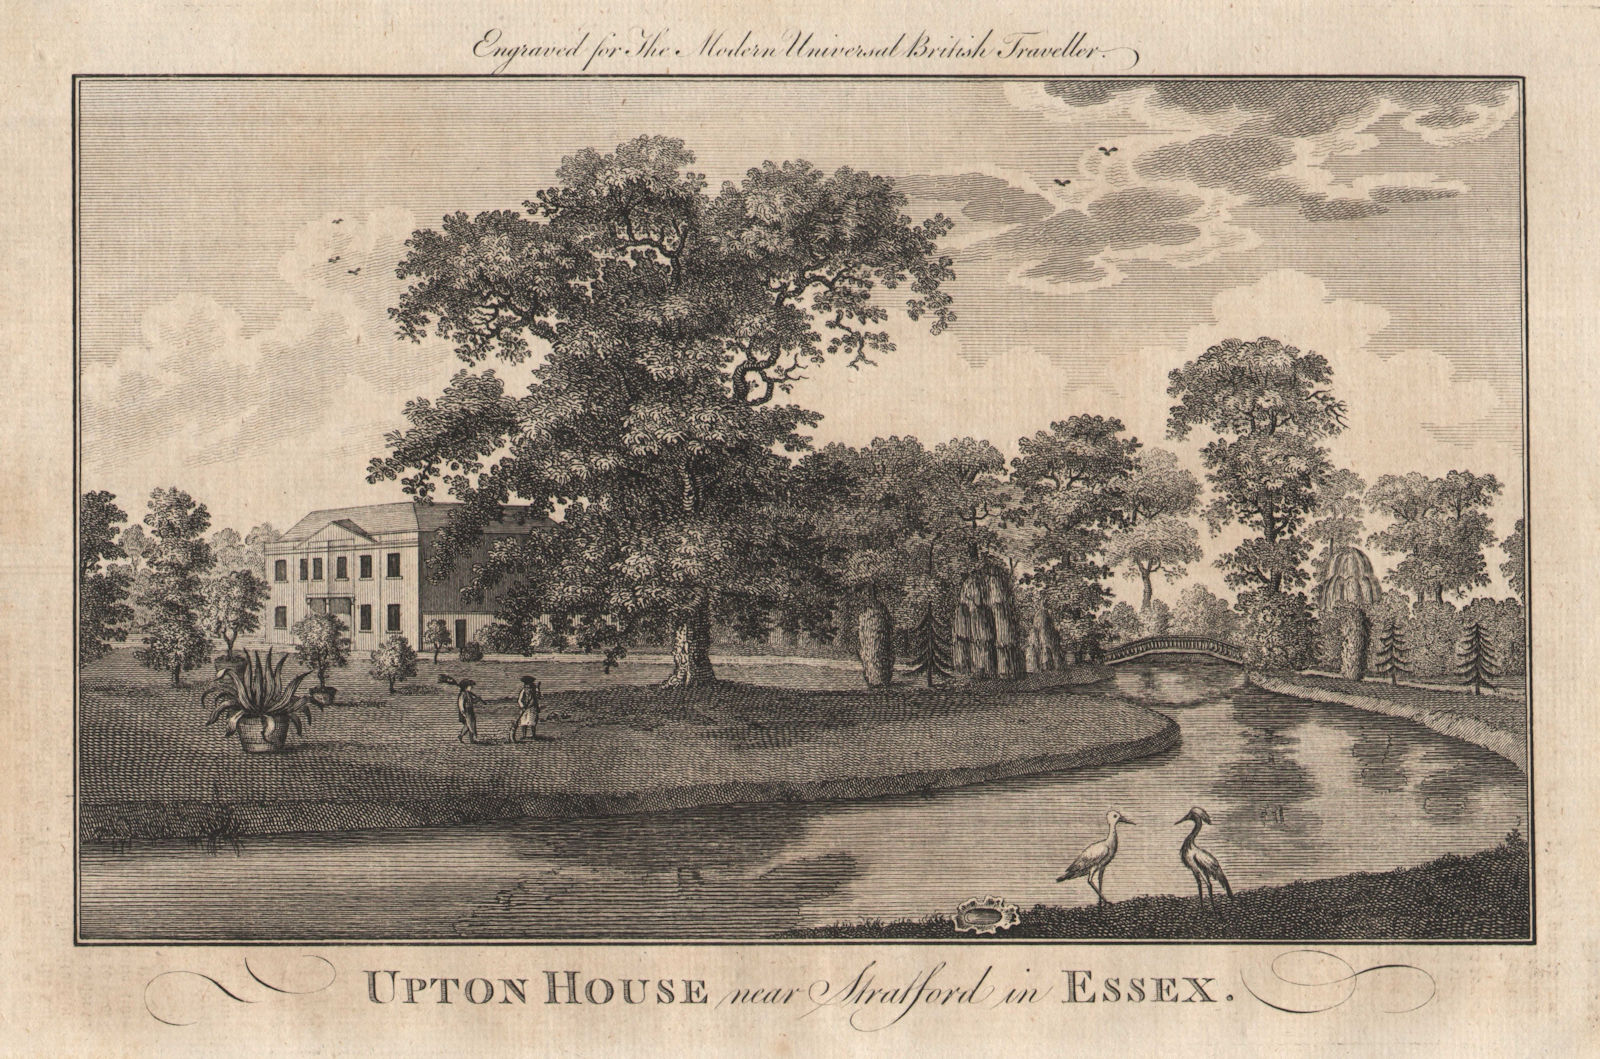 Upton House near Stratford in Essex. Now West Ham Park, London. BURLINGTON 1779